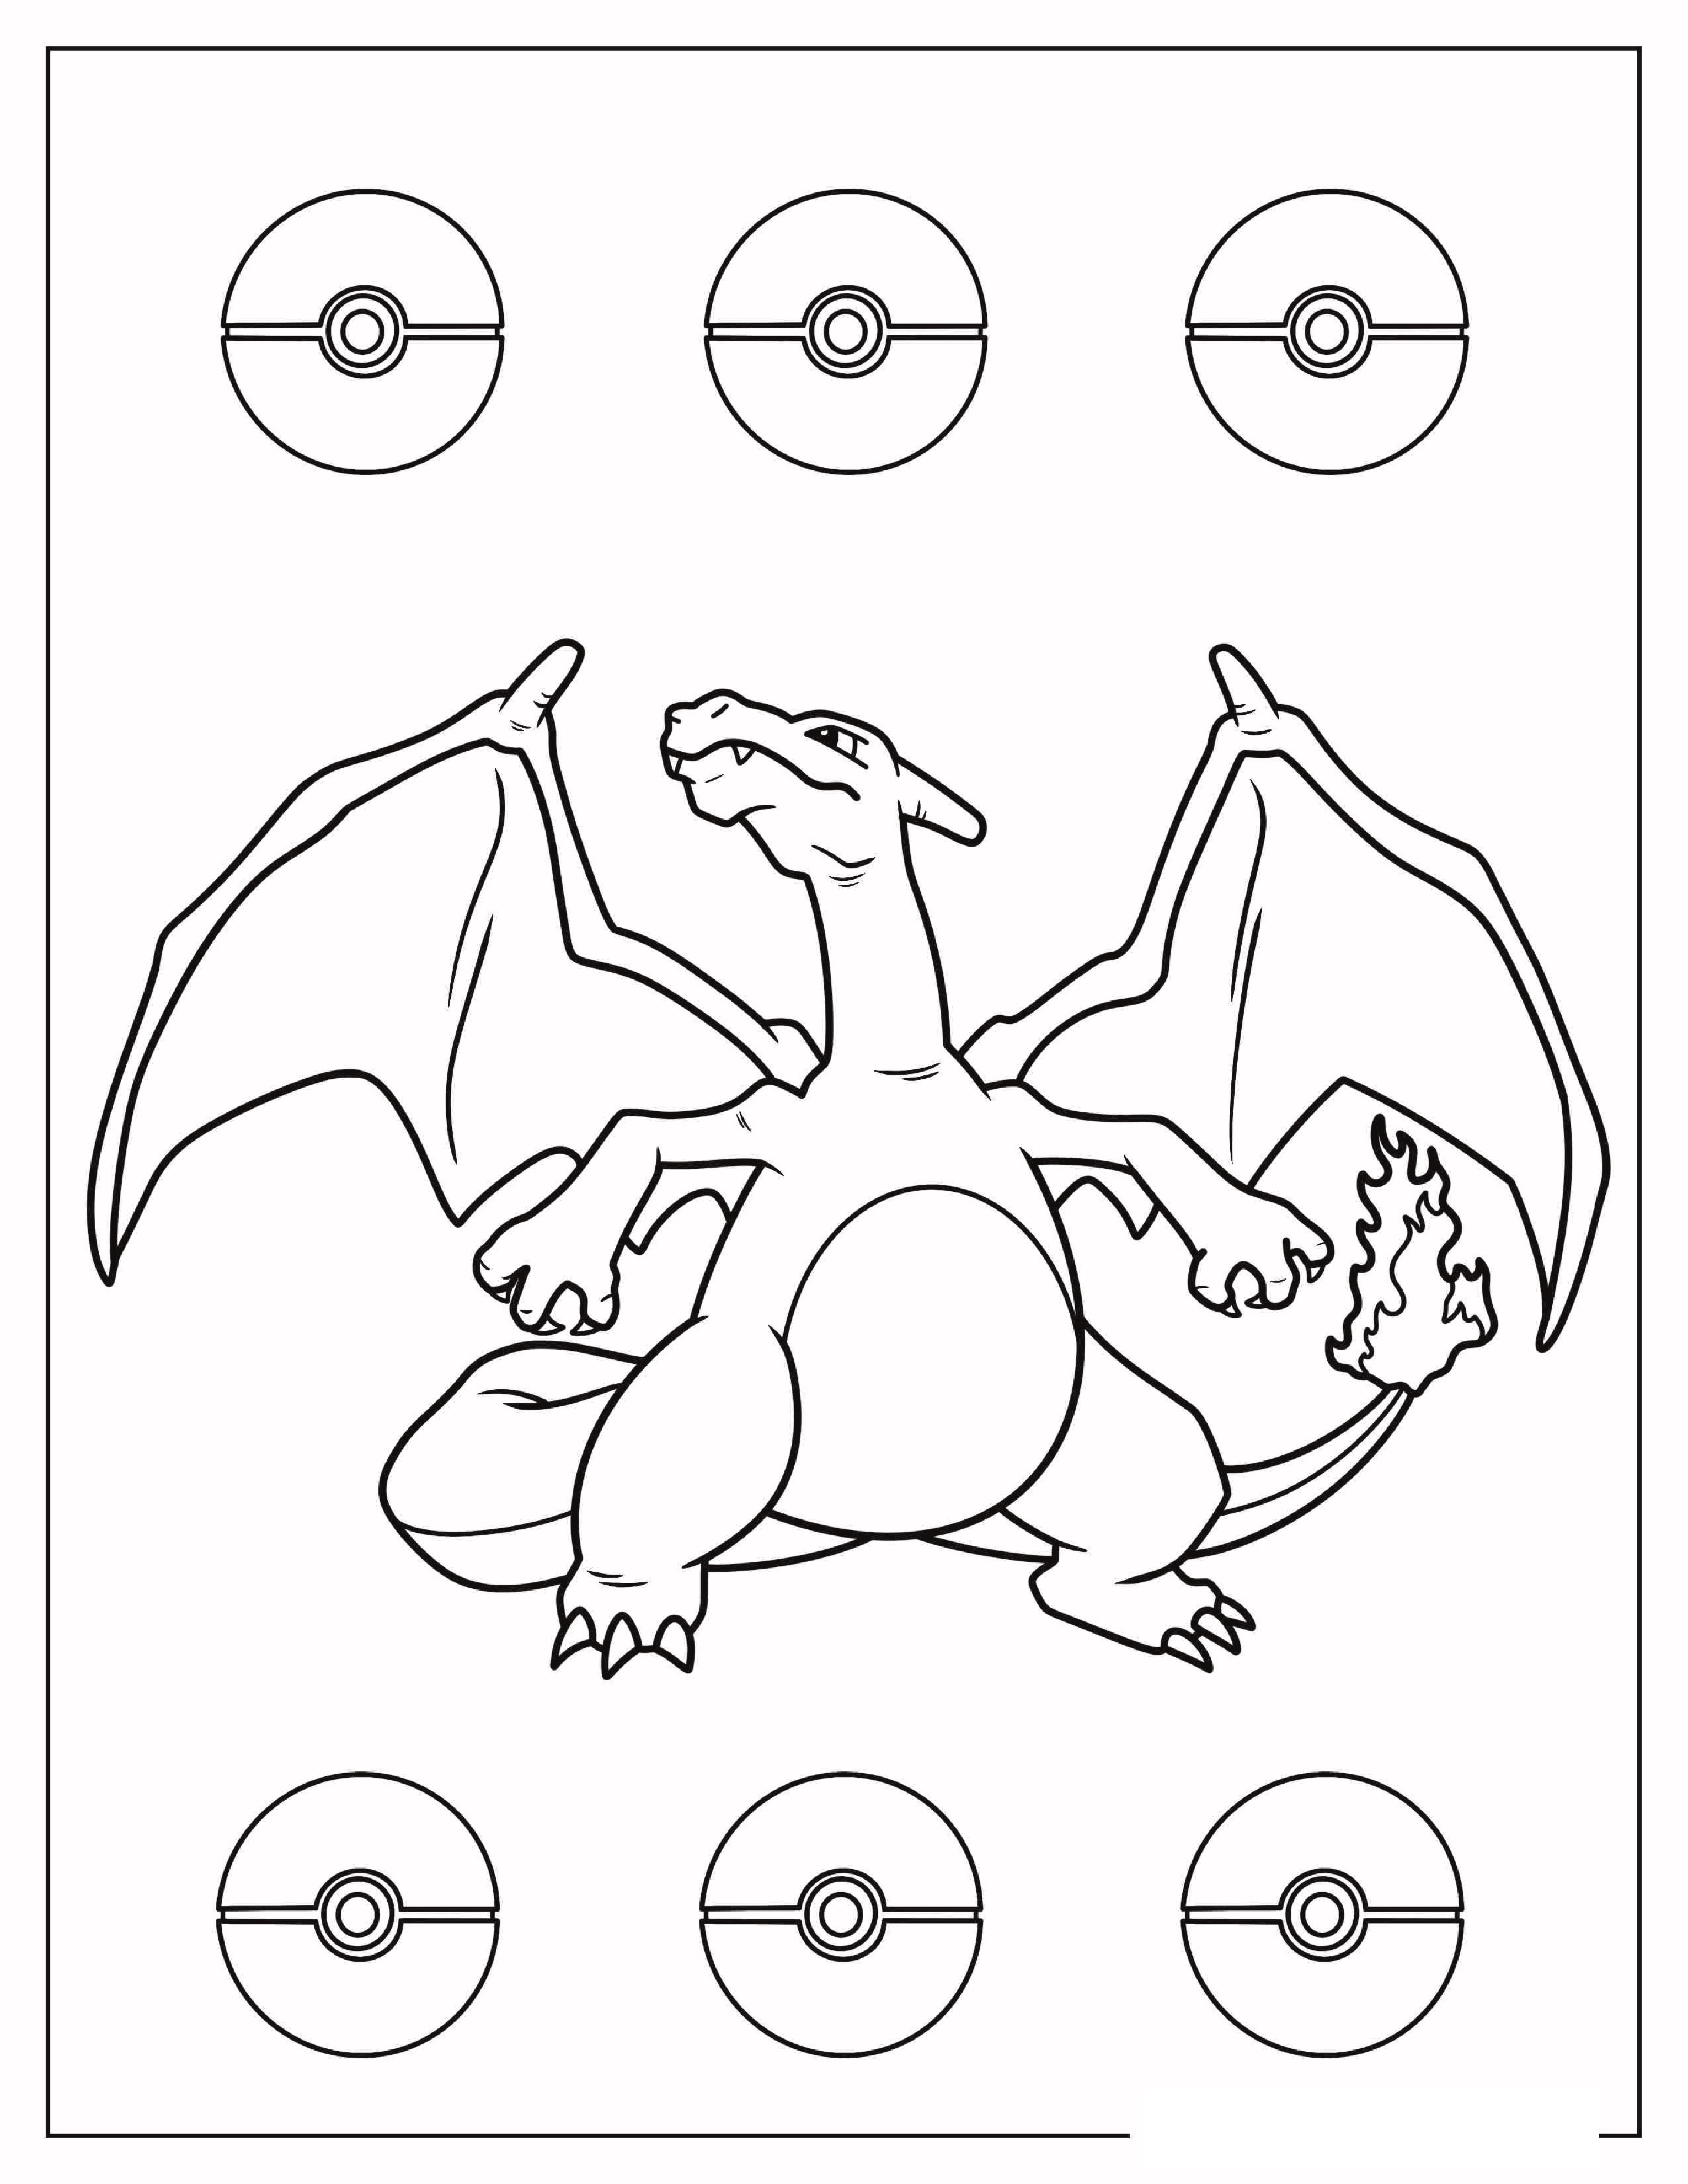 Simple-Charizard-Pokemon-To-Color.jpg